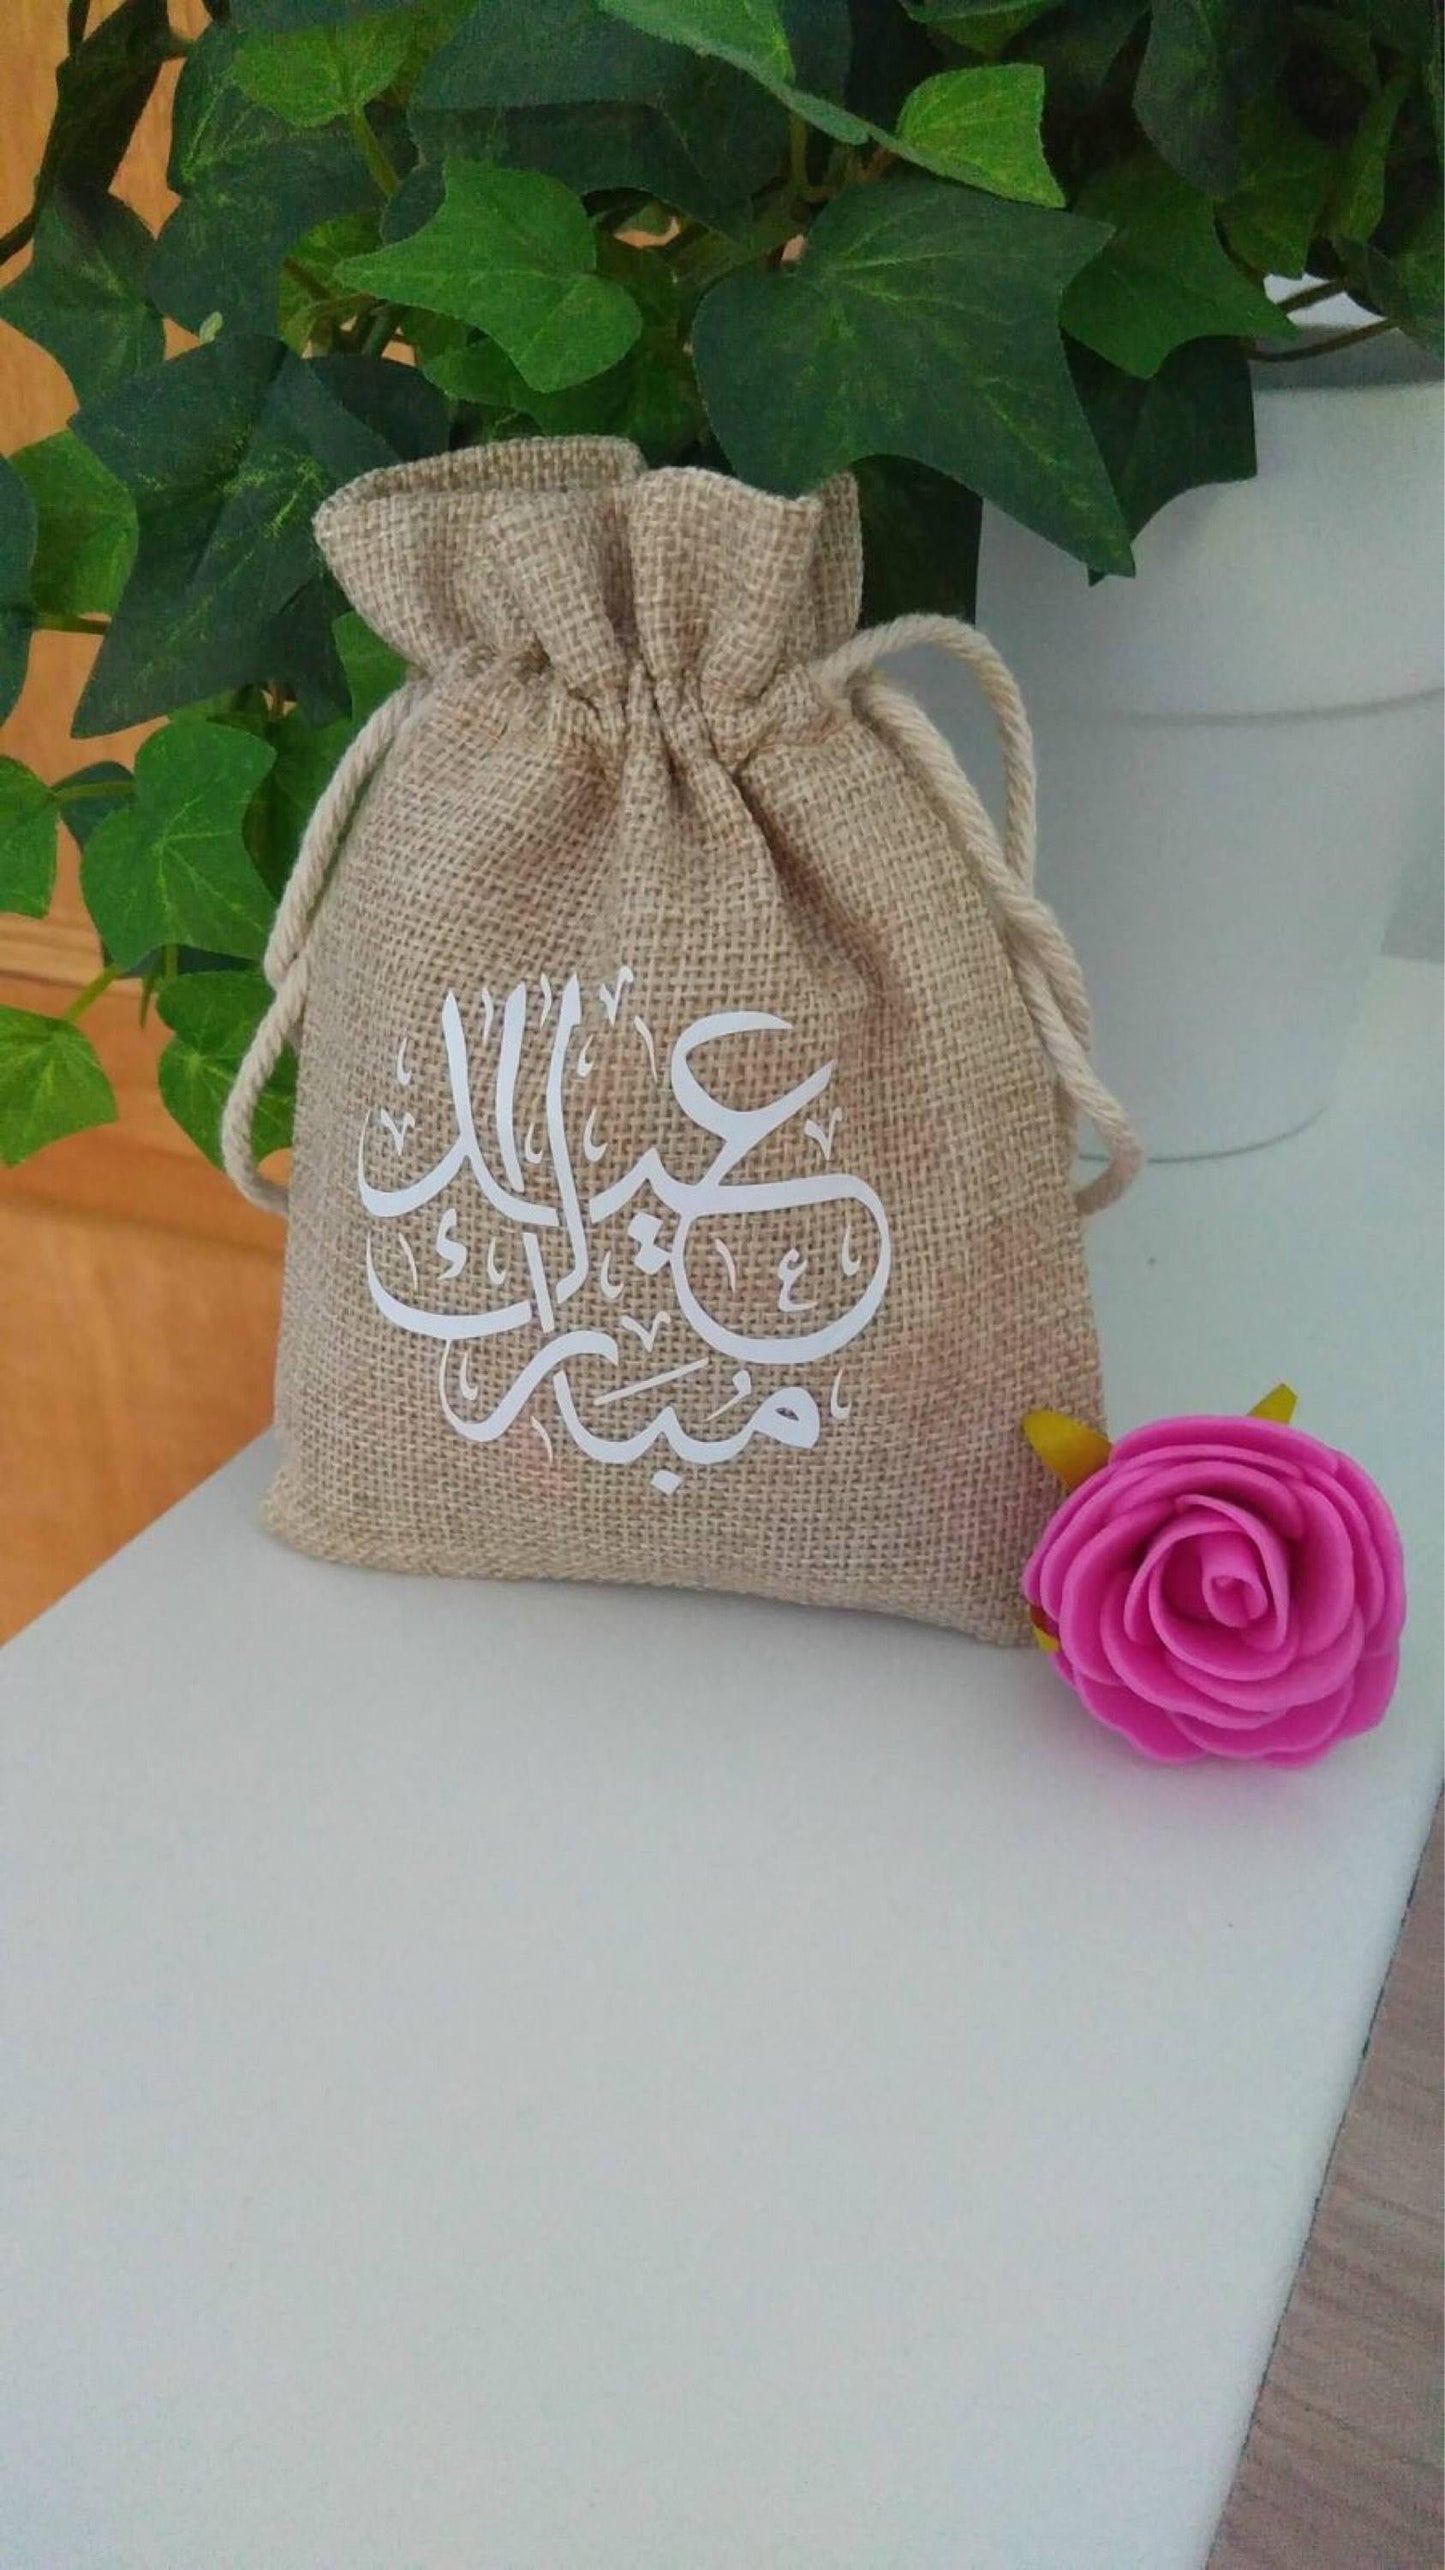 Eid Mubarak calligraphy Giftbag (5 pieces) - Unique Tasbihs & Gifts